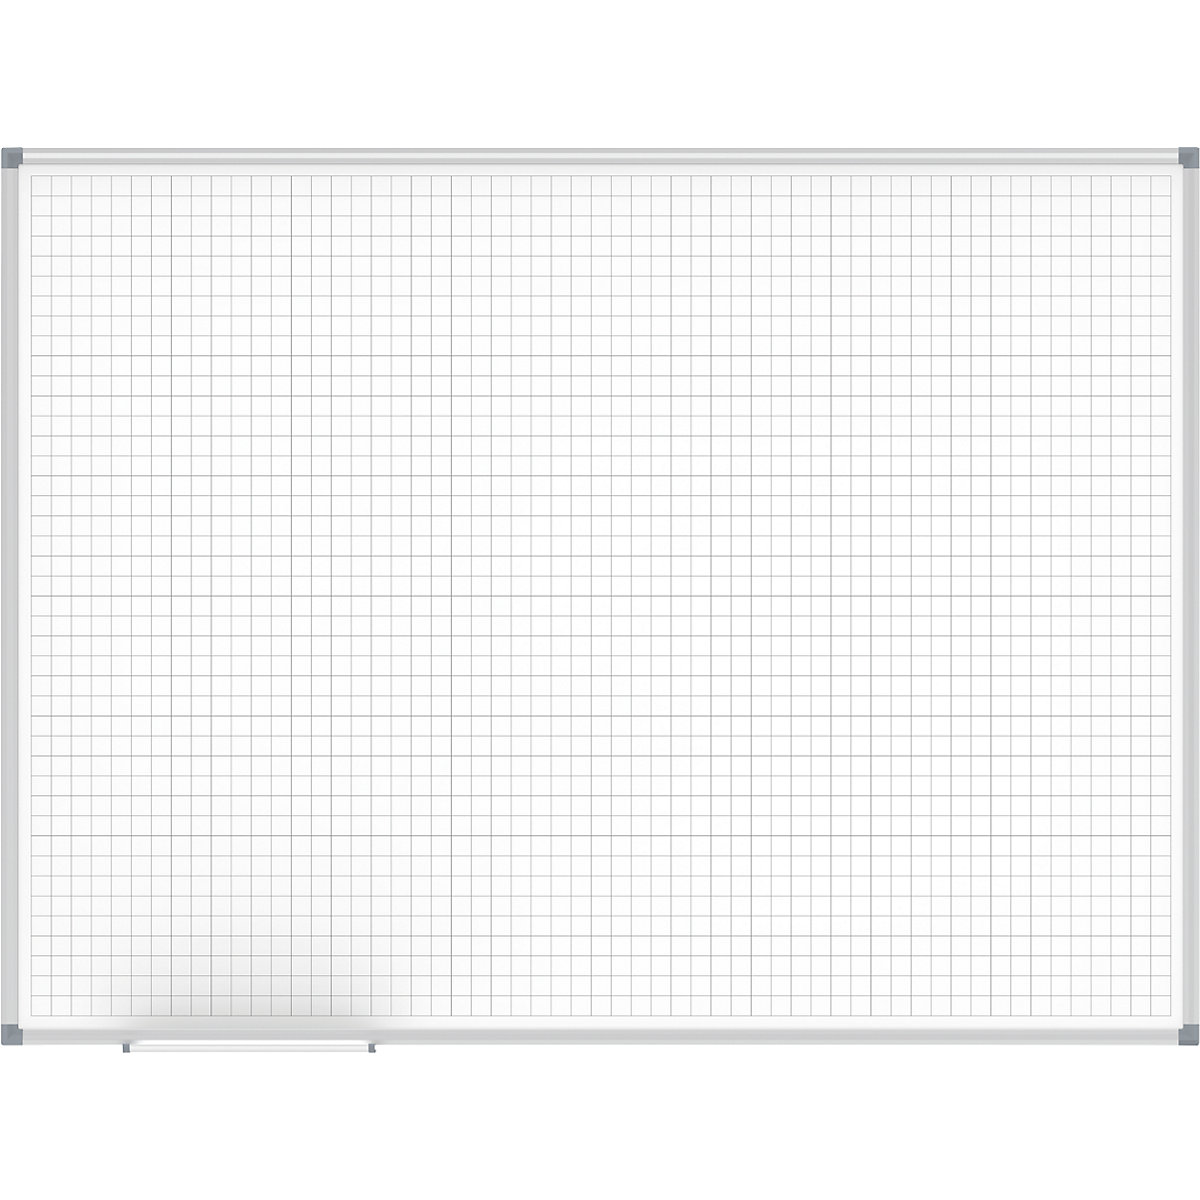 Rastrová tabuľa MAULstandard, biela – MAUL, raster 20 x 20 mm, š x v 1200 x 900 mm-1